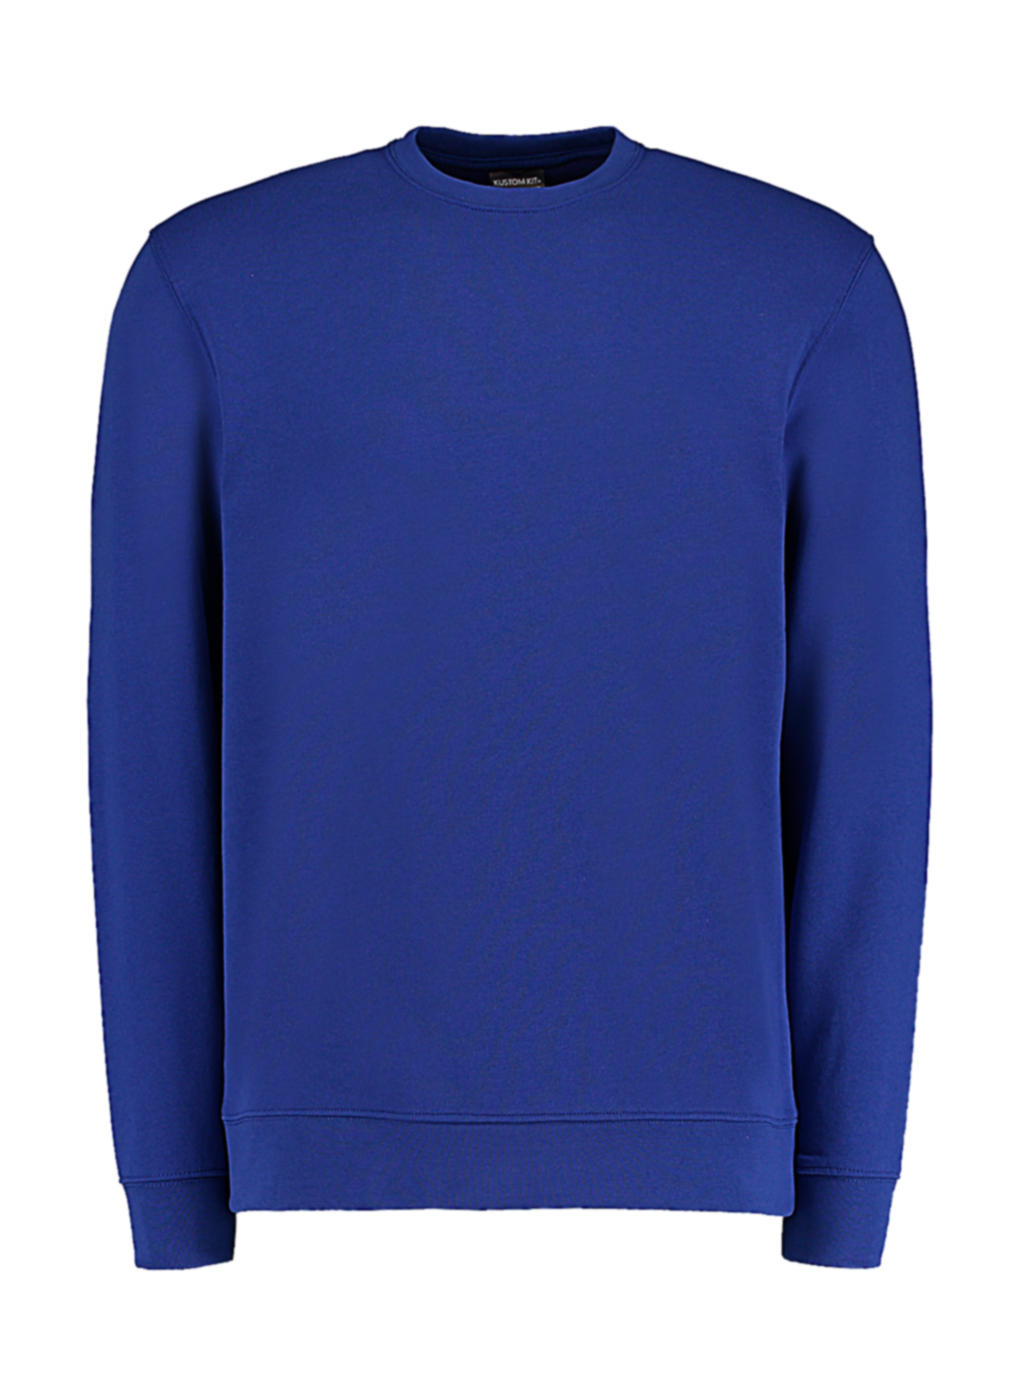  Regular Fit Sweatshirt Superwash? 60? in Farbe Royal